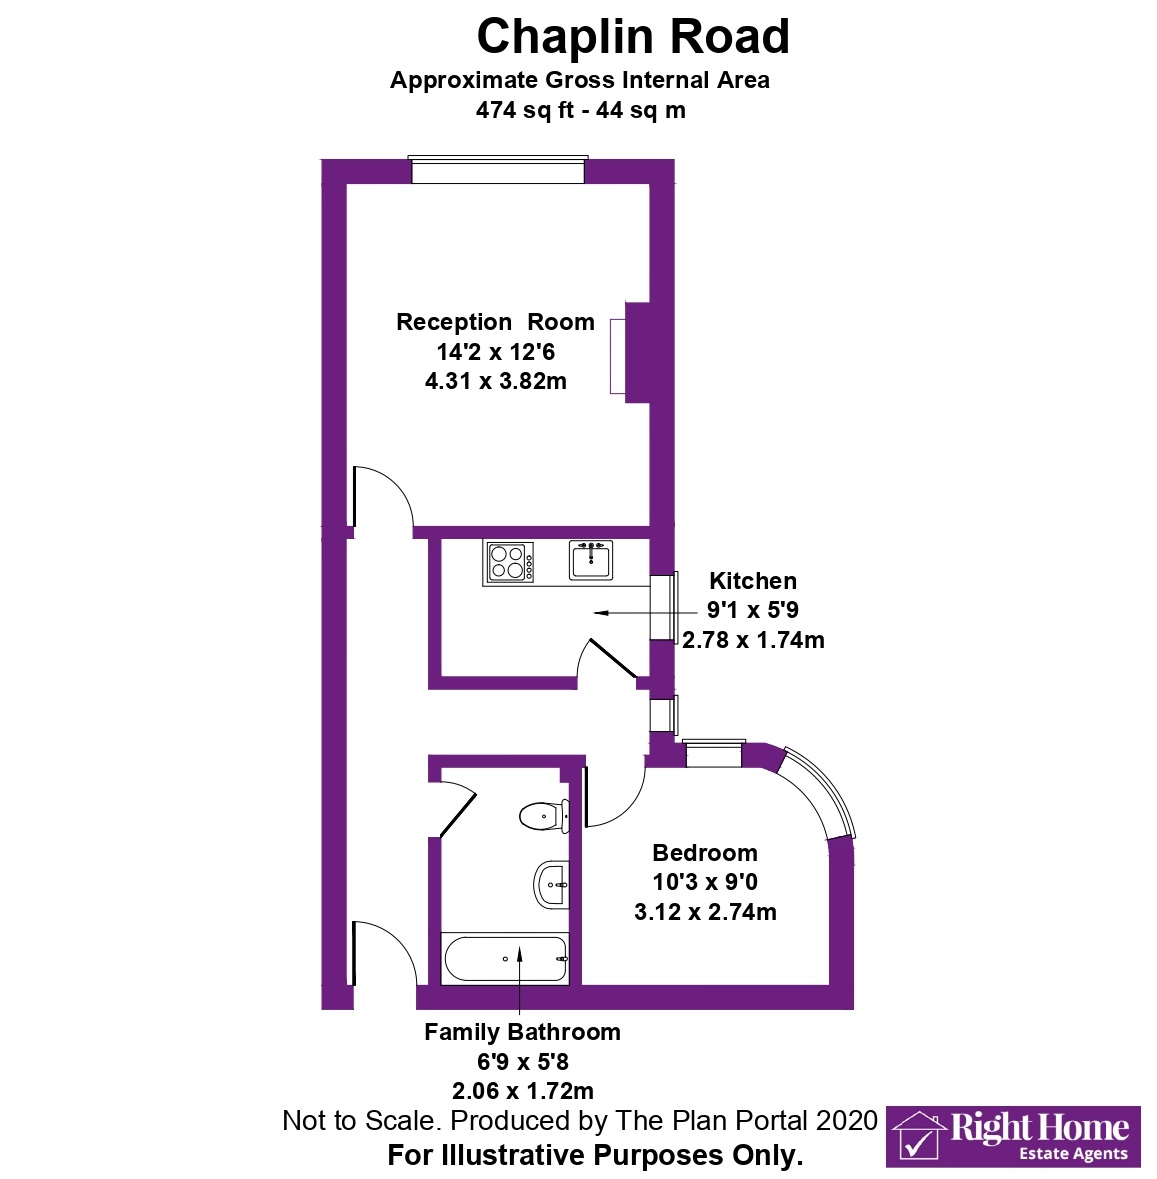 Floorplan of CHAPLIN ROAD, WEMBLEY, MIDDLESEX, HA0 4UD